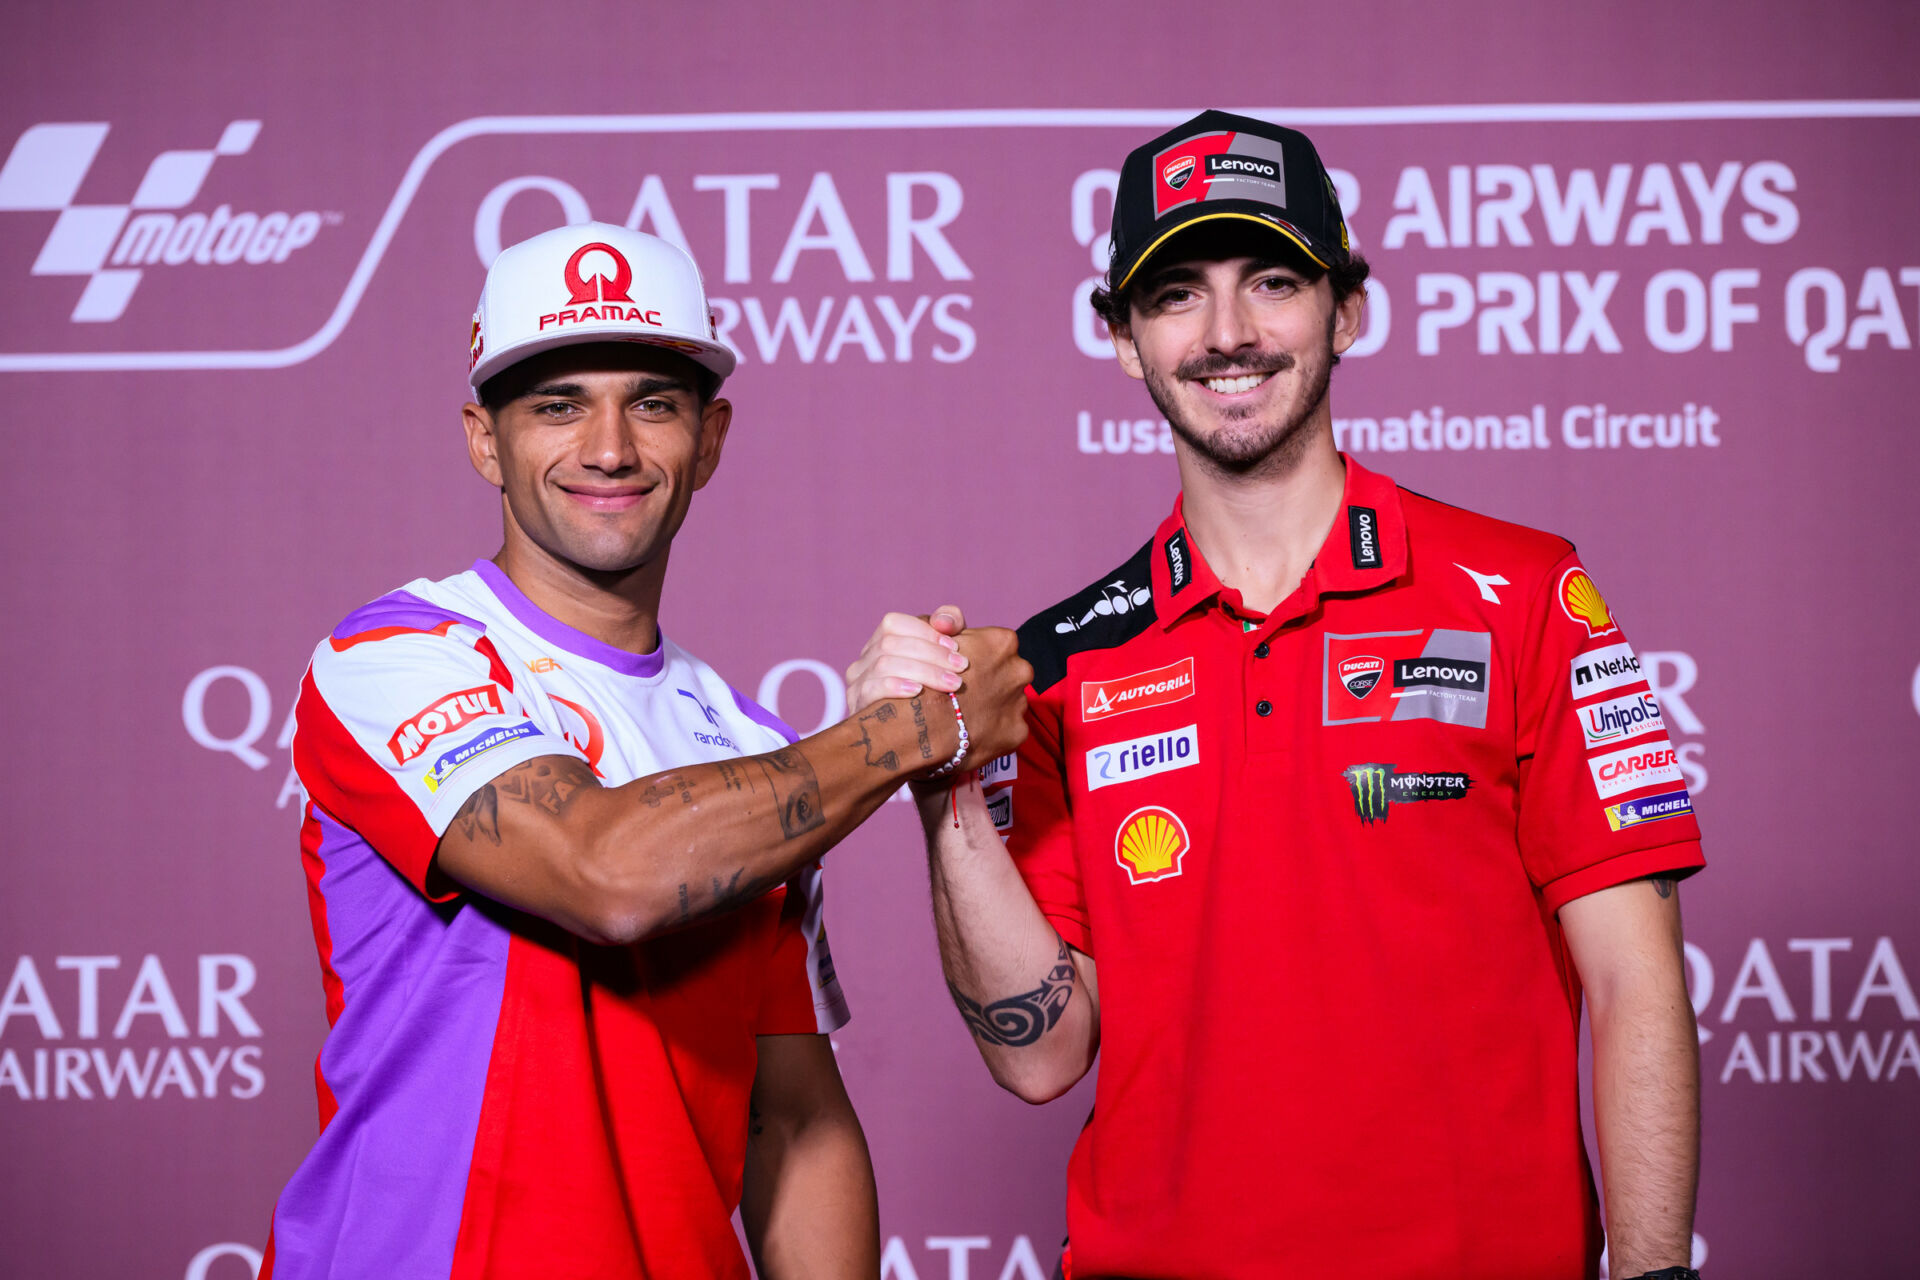 MotoGP World Championship hopefuls Jorge Martin (left) and Francesco Bagnaia (right), as seen at the Grand Prix of Qatar. Photo by Kohei Hirota.